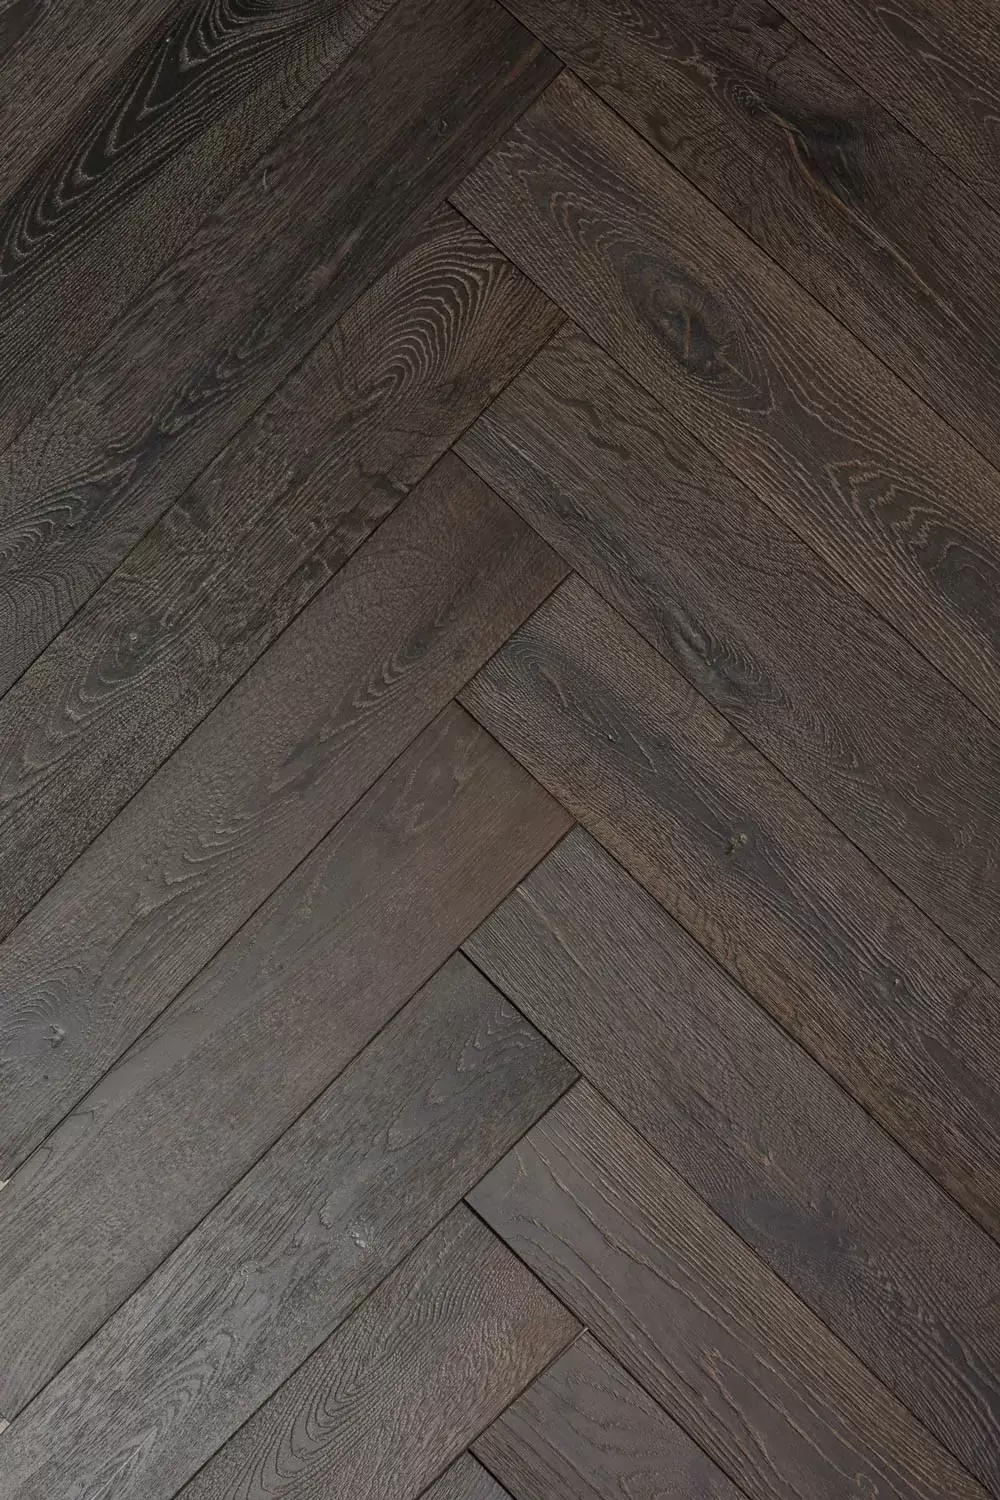 Herringbone Pattern Parquet Flooring